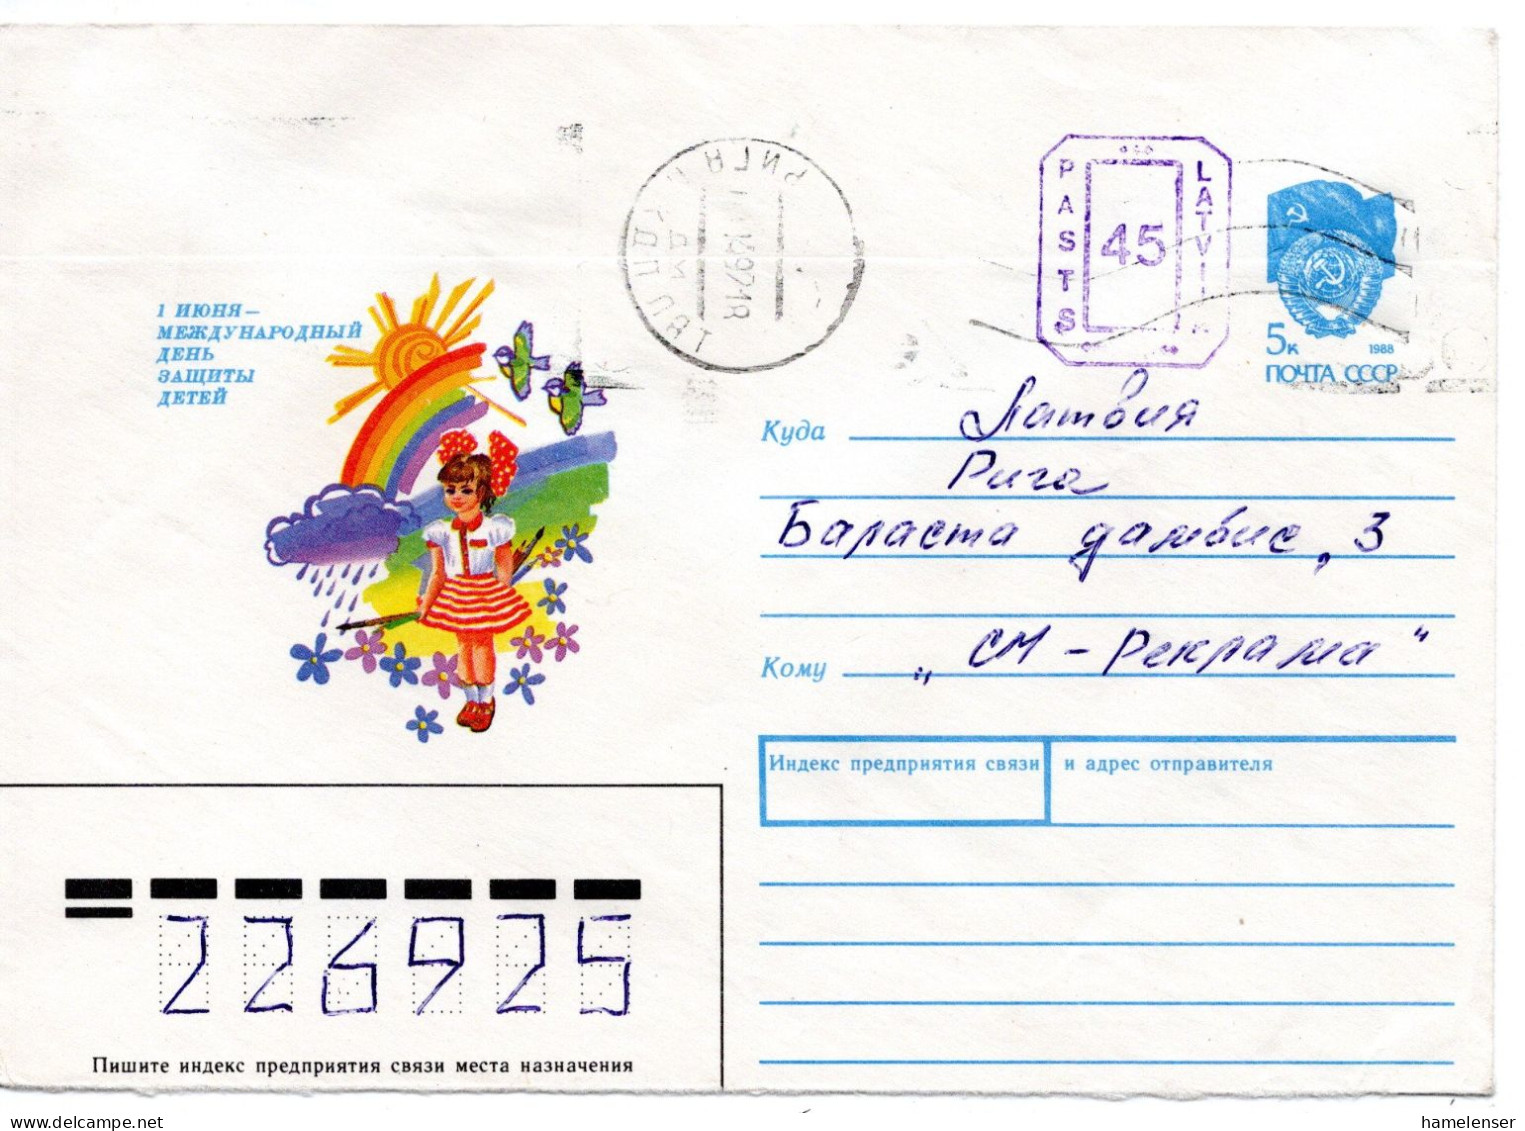 63959 - Lettland - 1992 - Sowj 5K GAU "Kinderschutztag" M ZusWertstpl 45K Als OrtsBf RIGA - Lettonie